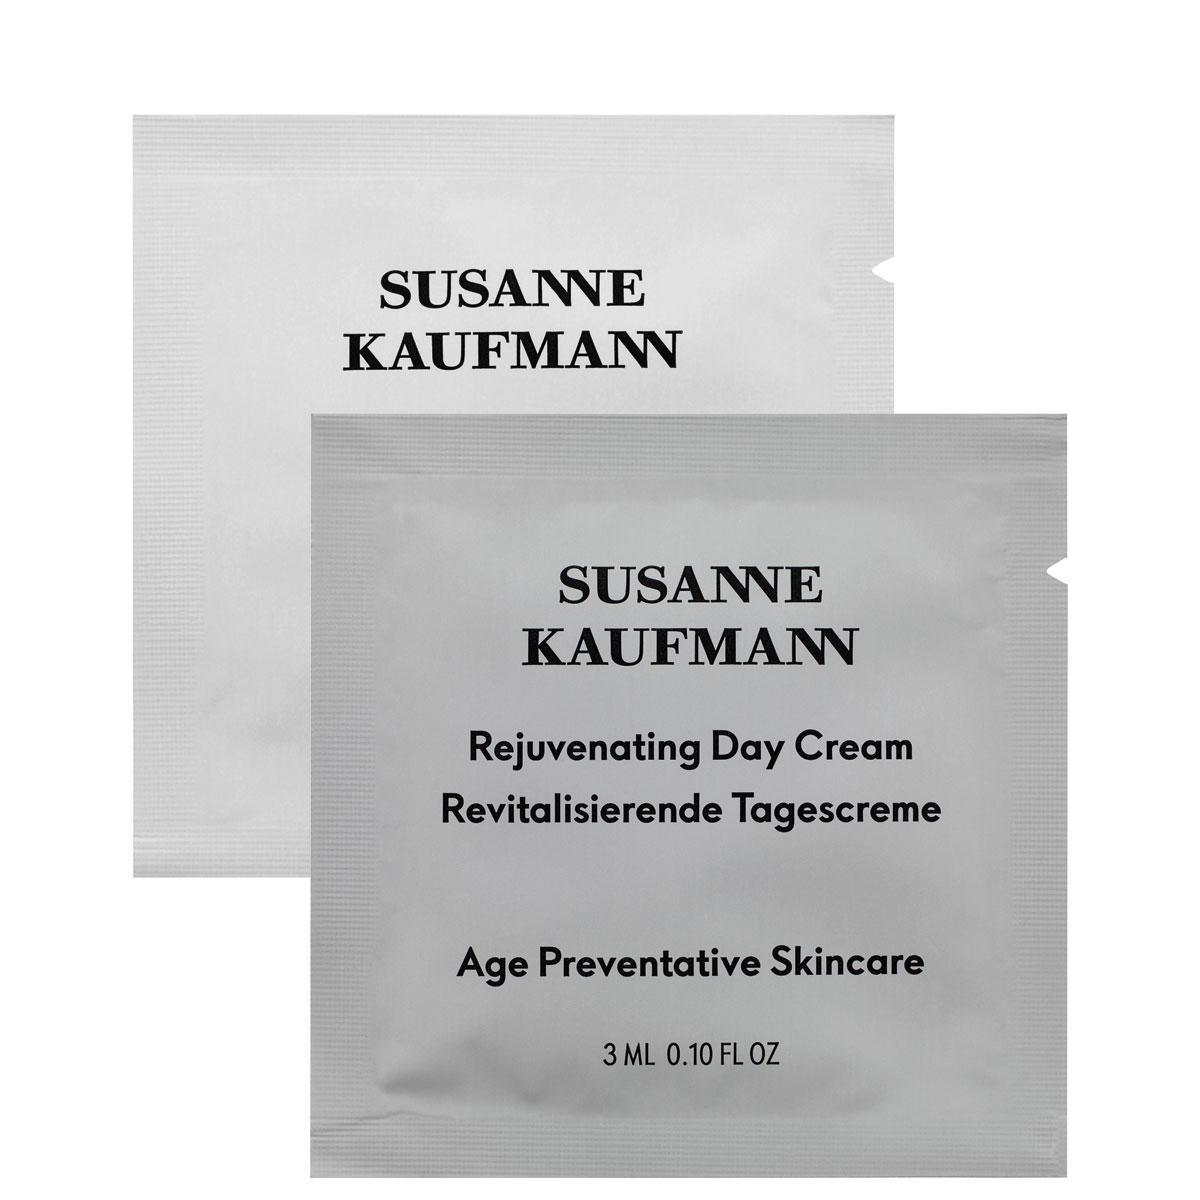 Susanne Kaufmann Anti Aging Tagescreme Linie A 3 ml